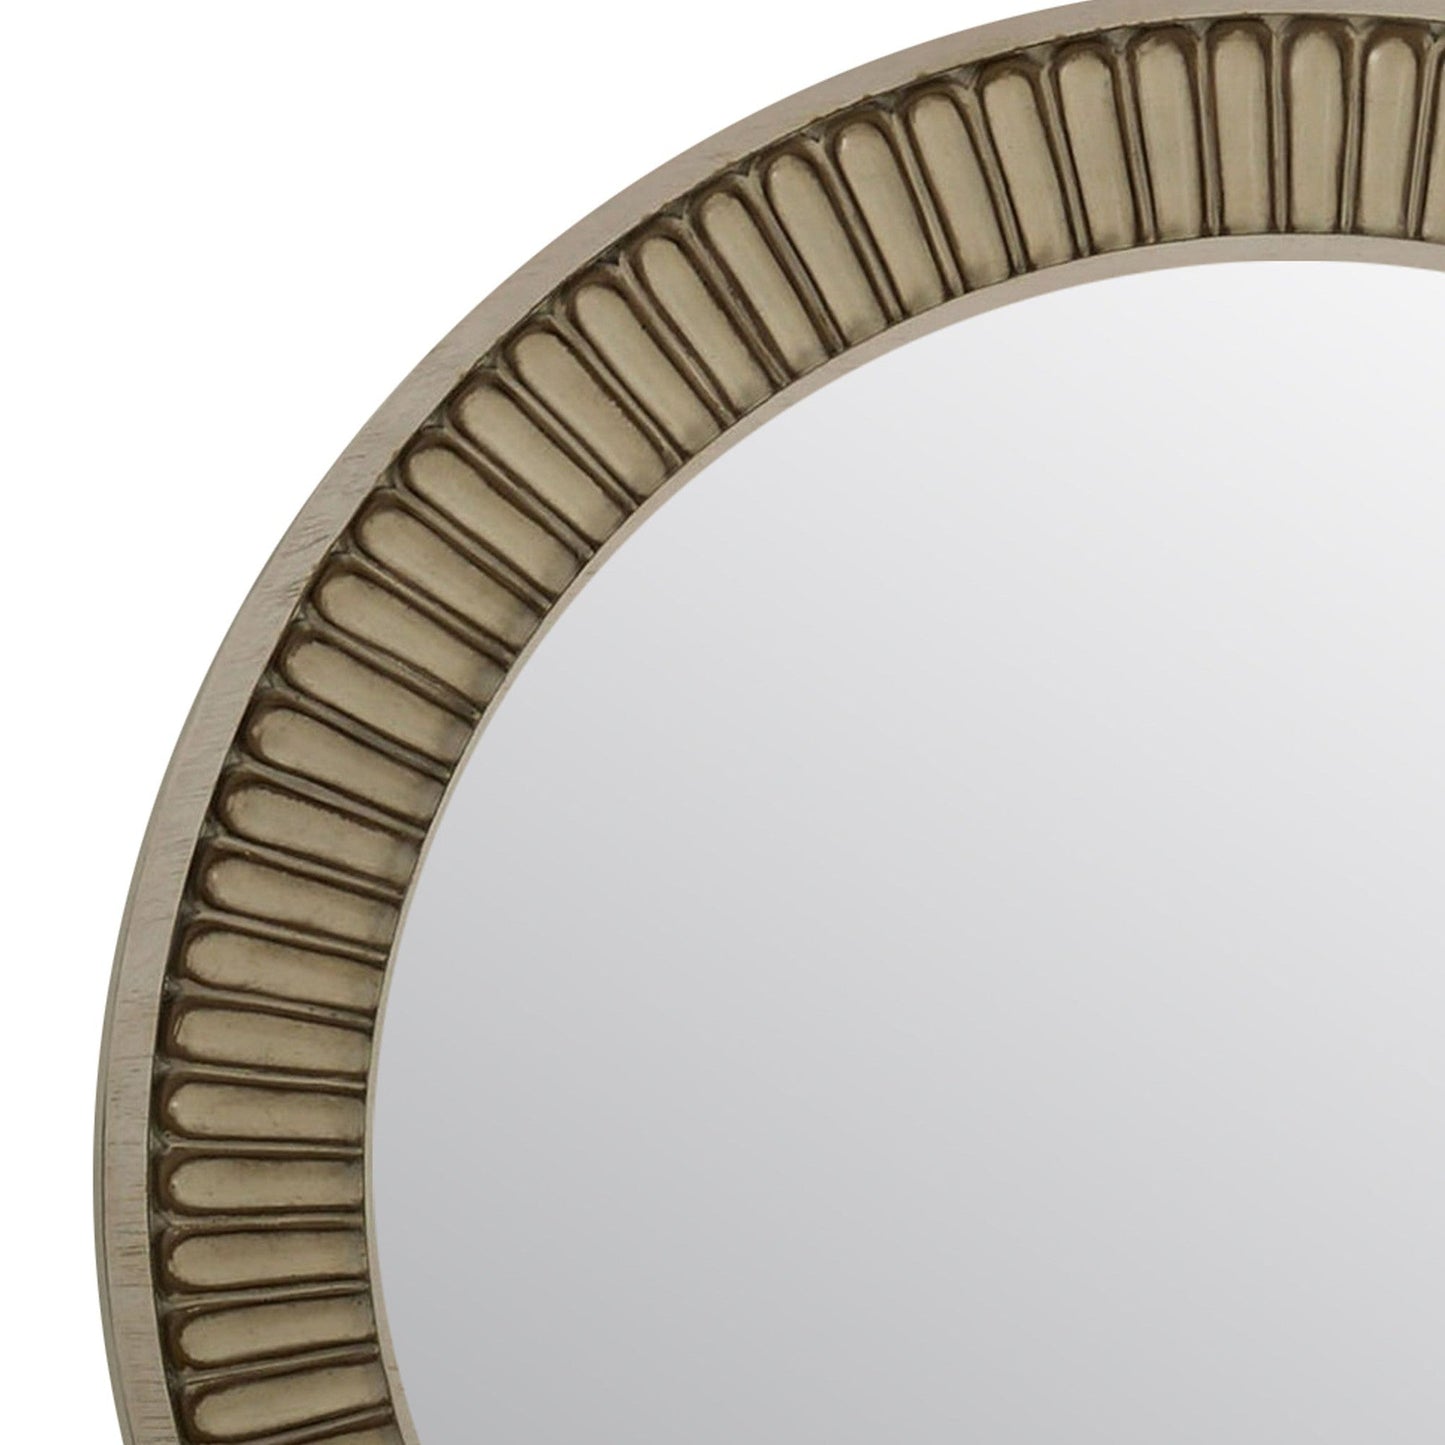 Benzara White Traditional Style Round Mirror With Decorative Trim Edges